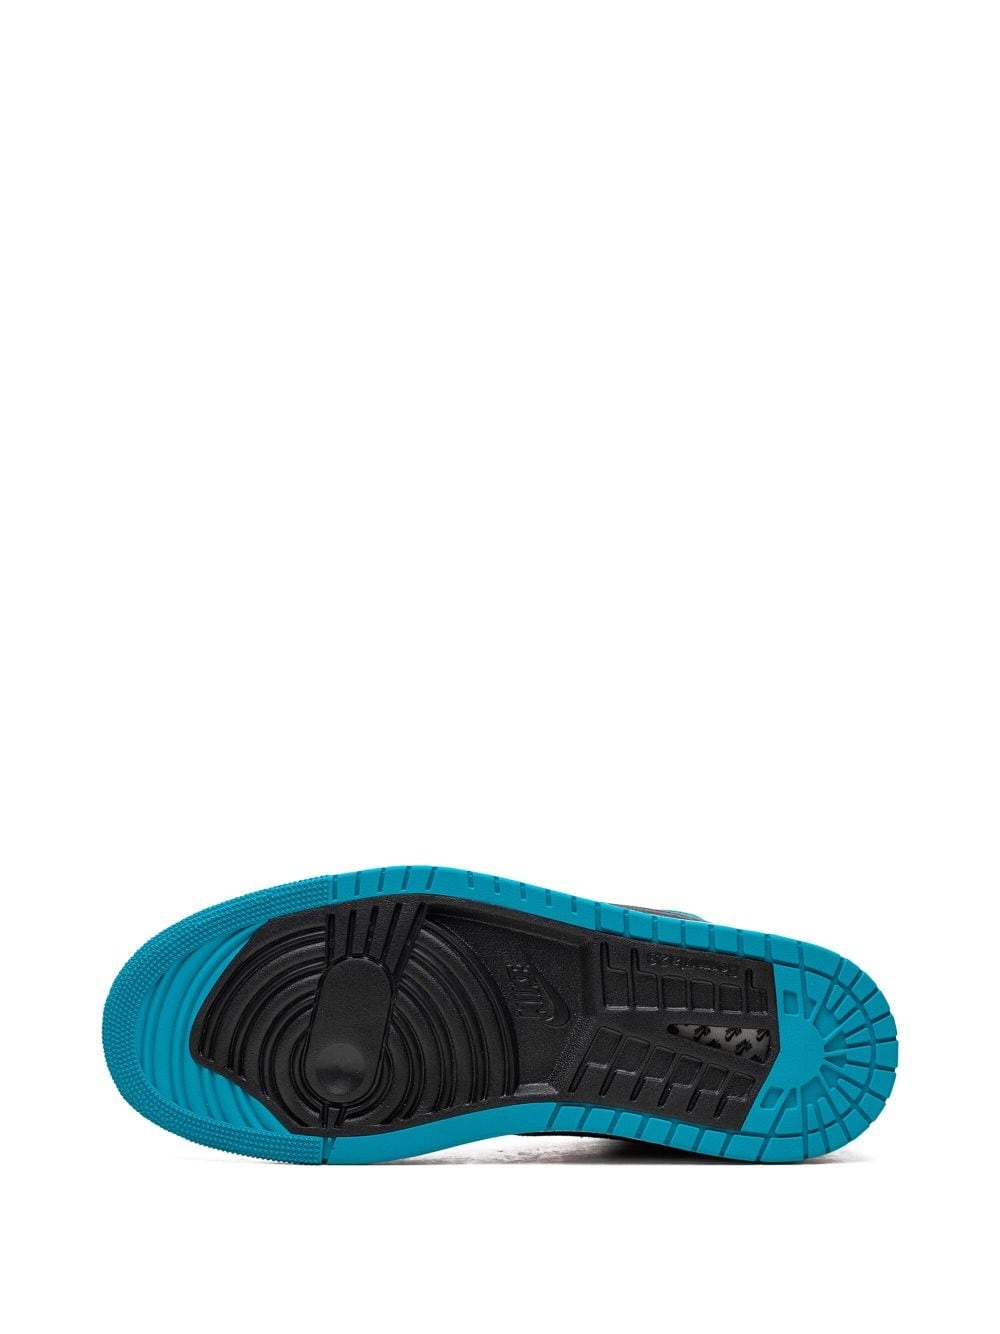 Air Jordan 1 Zoom CMFT 2 "Bleached Aqua" sneakers - 4